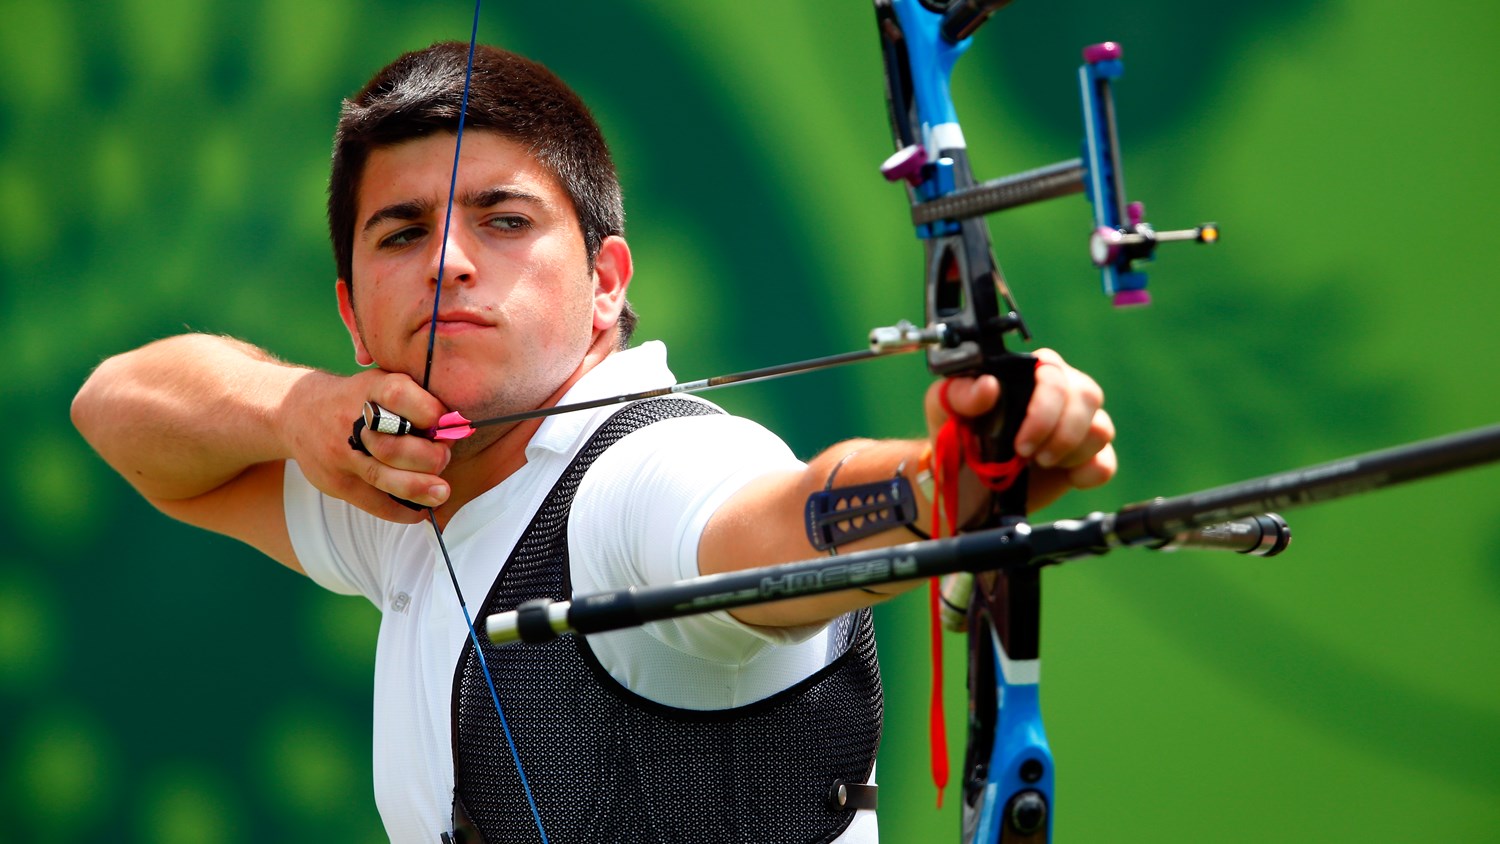 Alvarino Garcia wins gold to close Archery